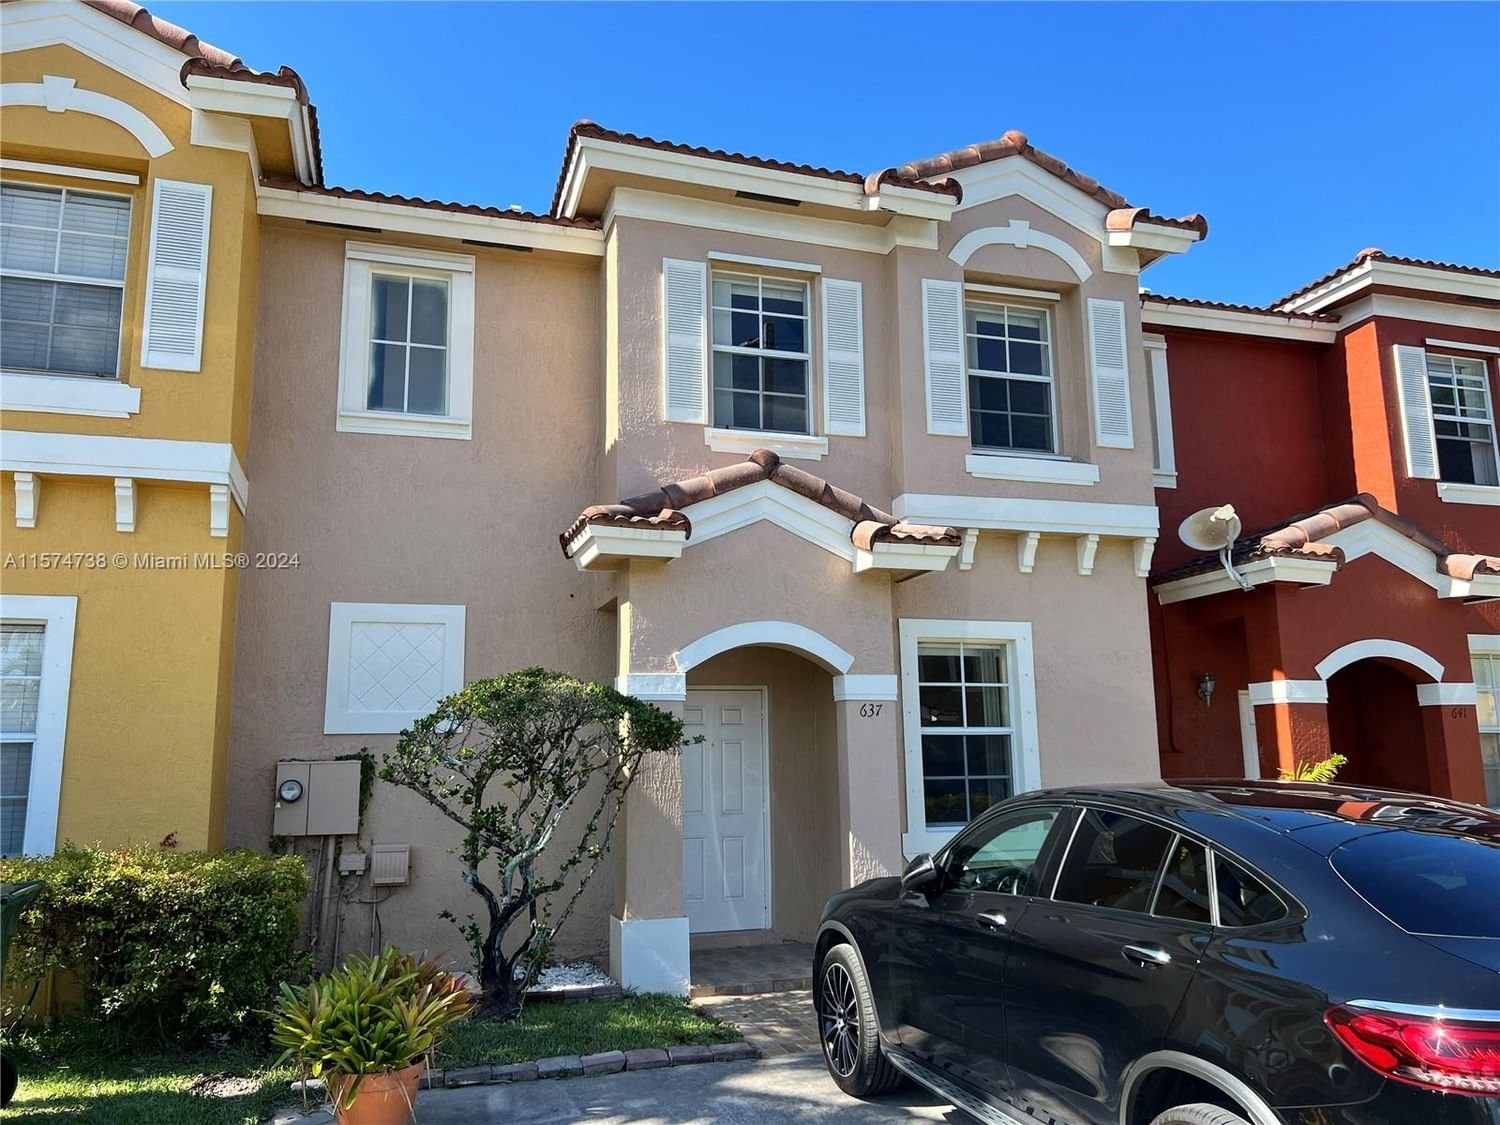 Real estate property located at 637 Mowry Ct, Miami-Dade County, CASA DEL SUR, Homestead, FL